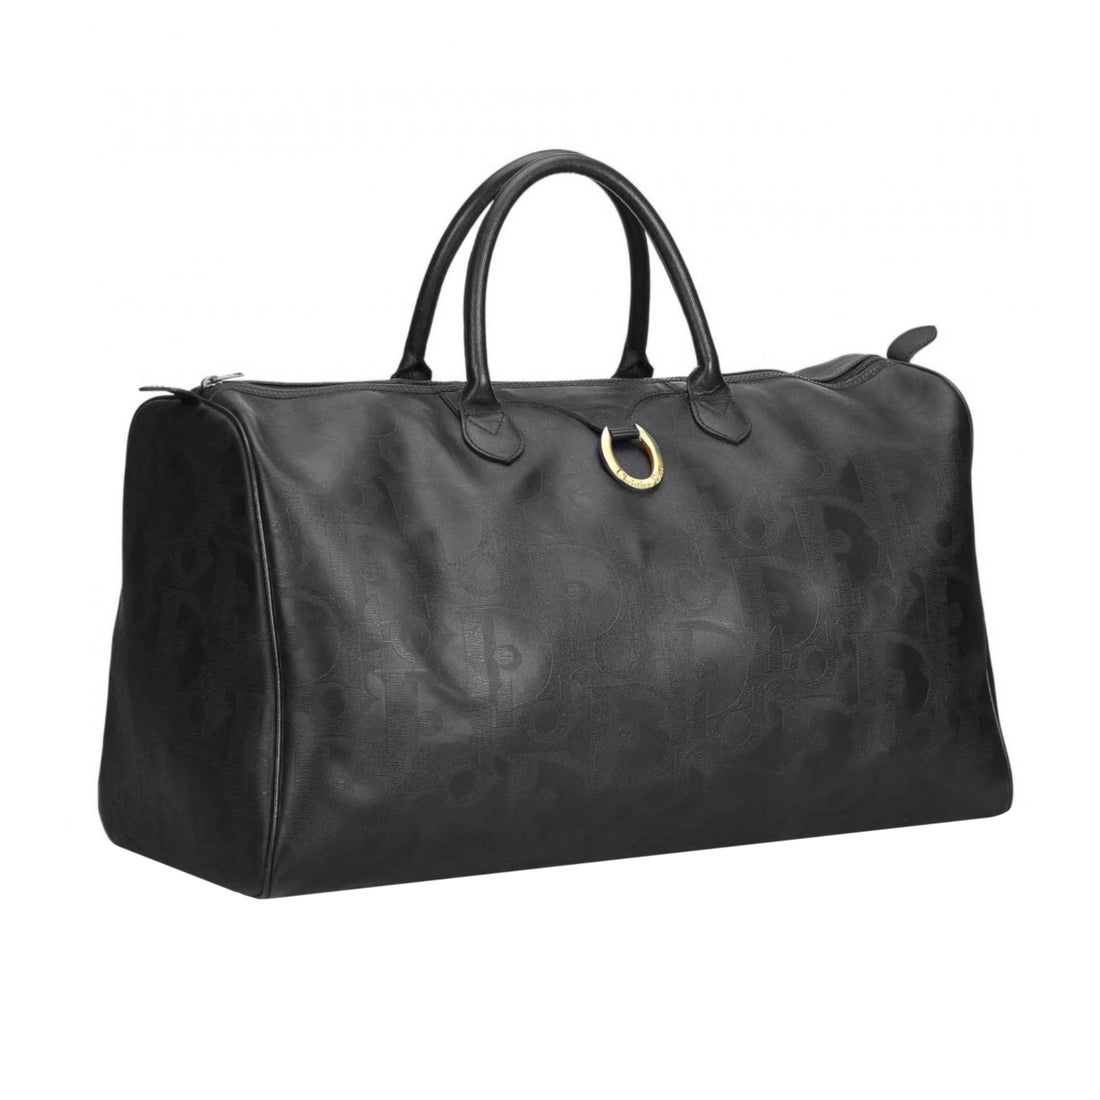 Dior Monogram Leather Duffle Bag